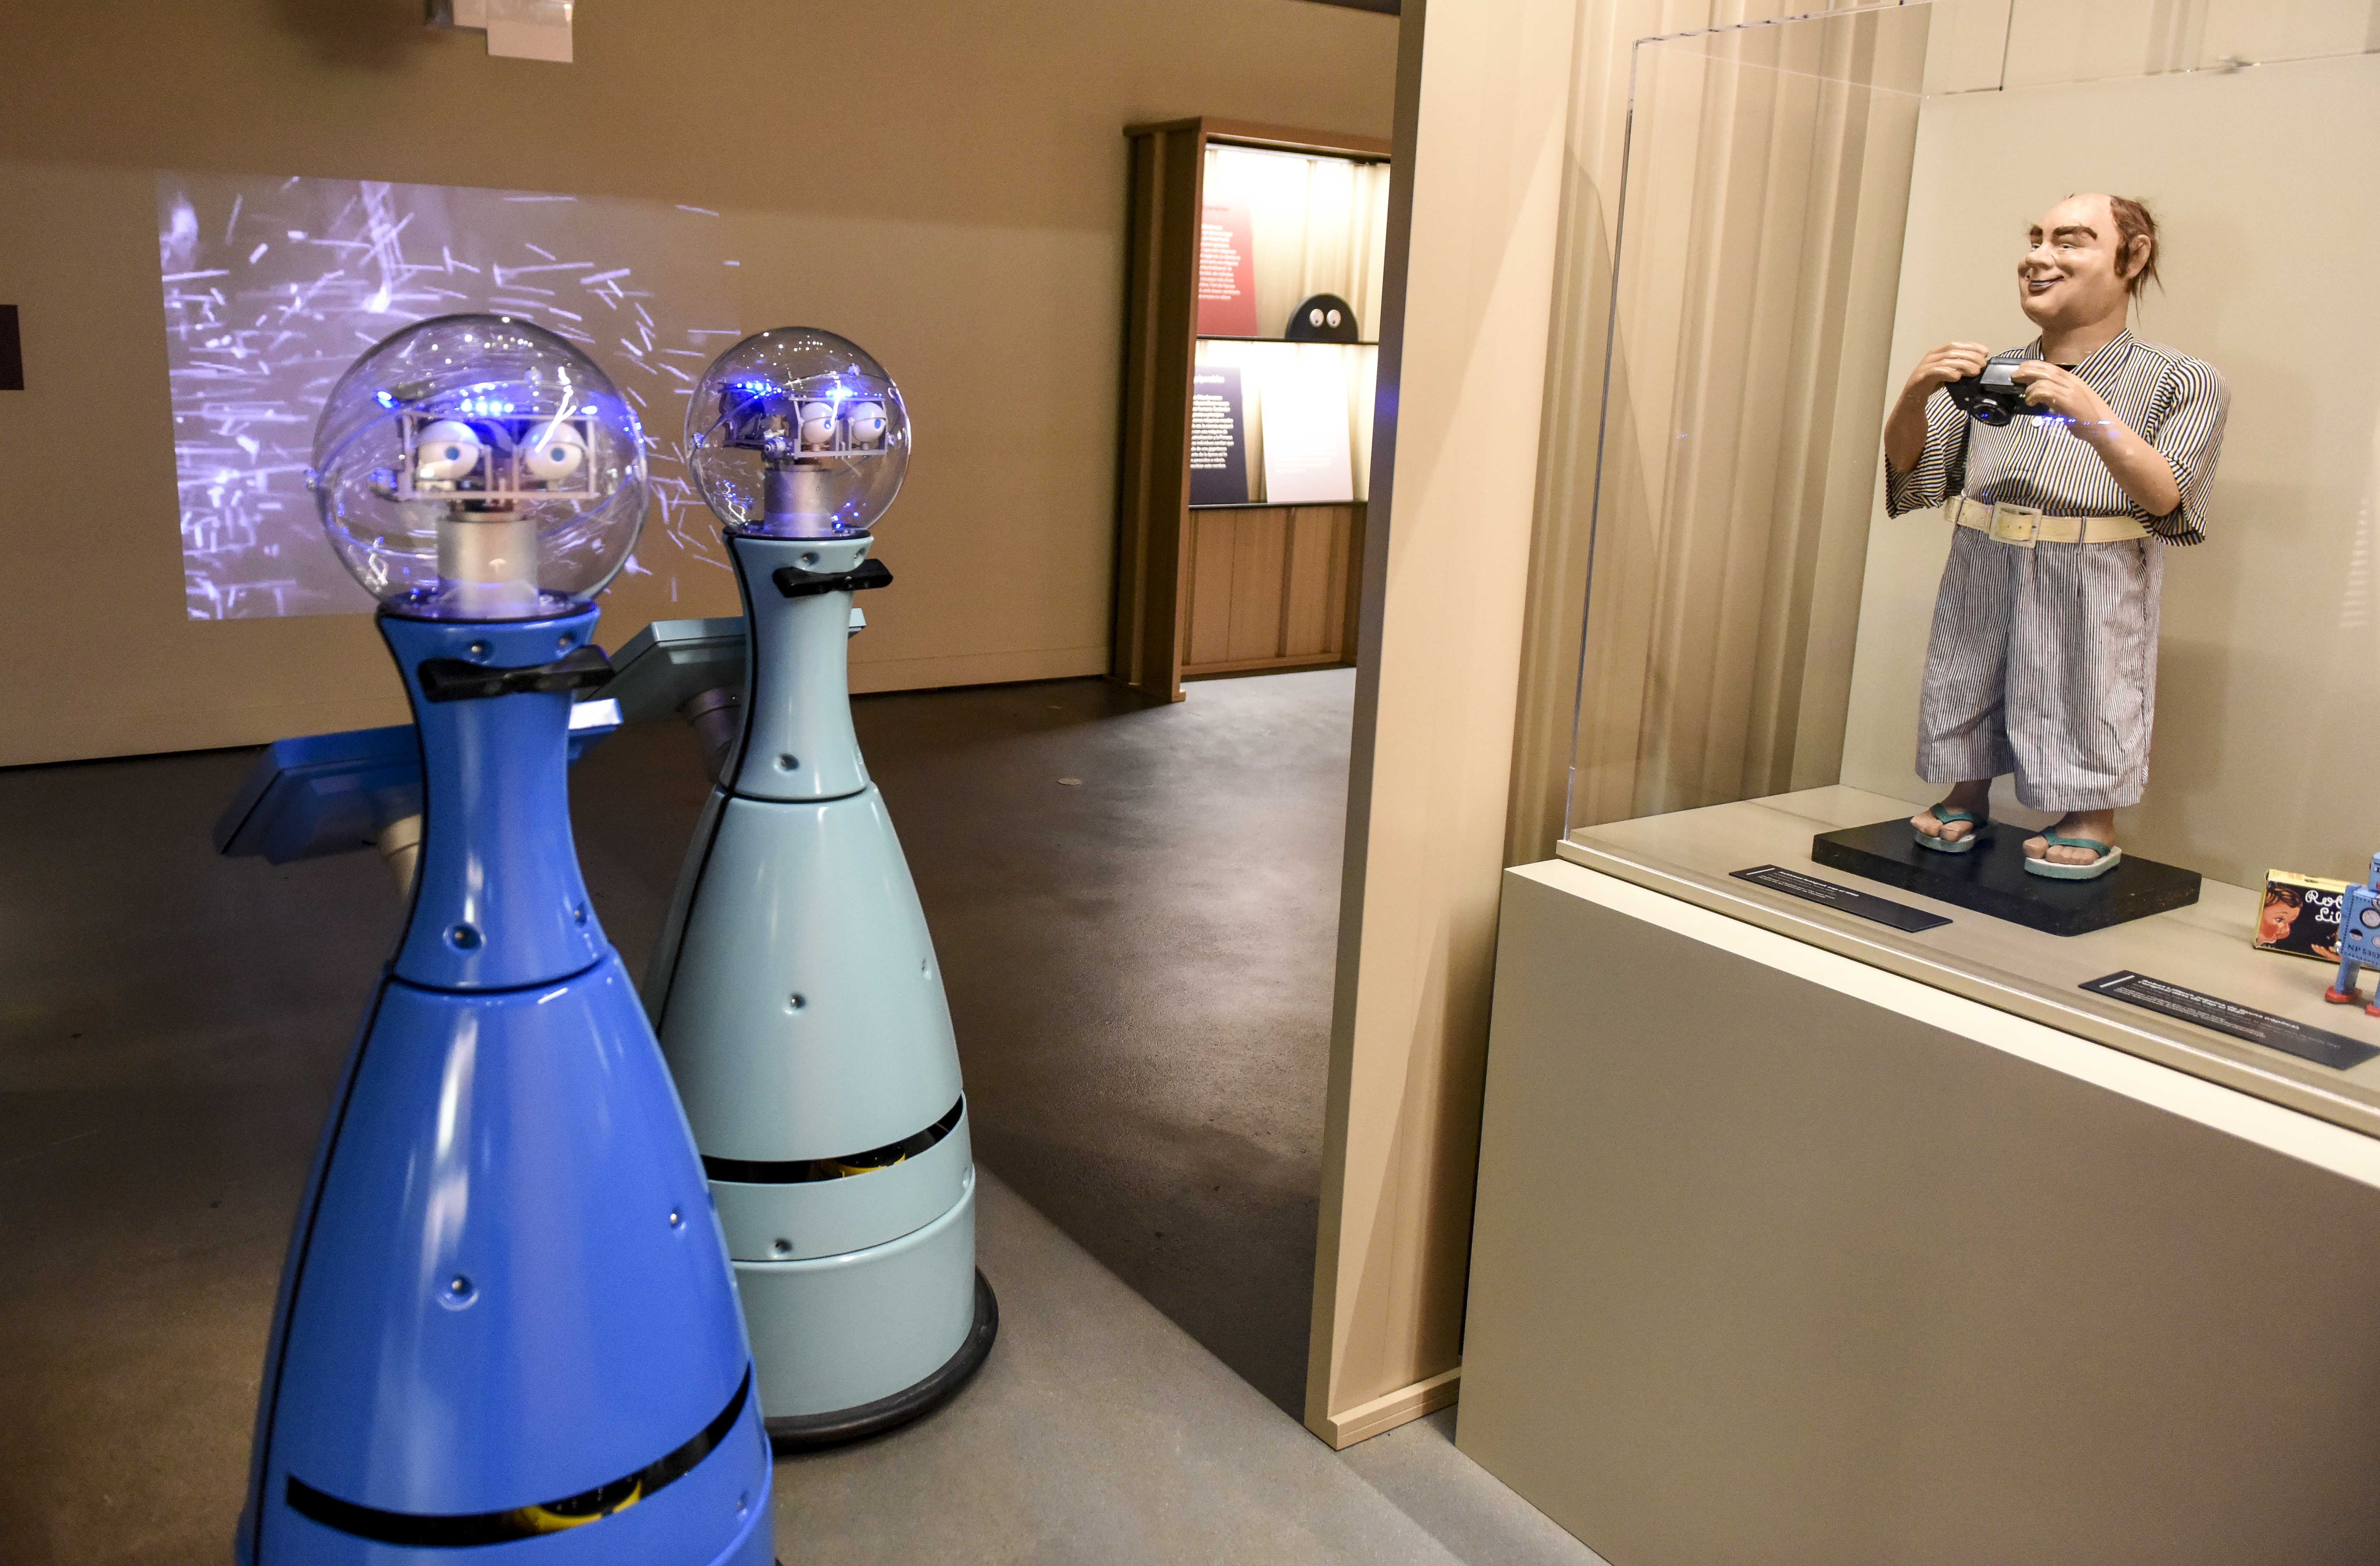 'Robots': la ciència que ens ajuda, però que fa por, al CosmoCaixa